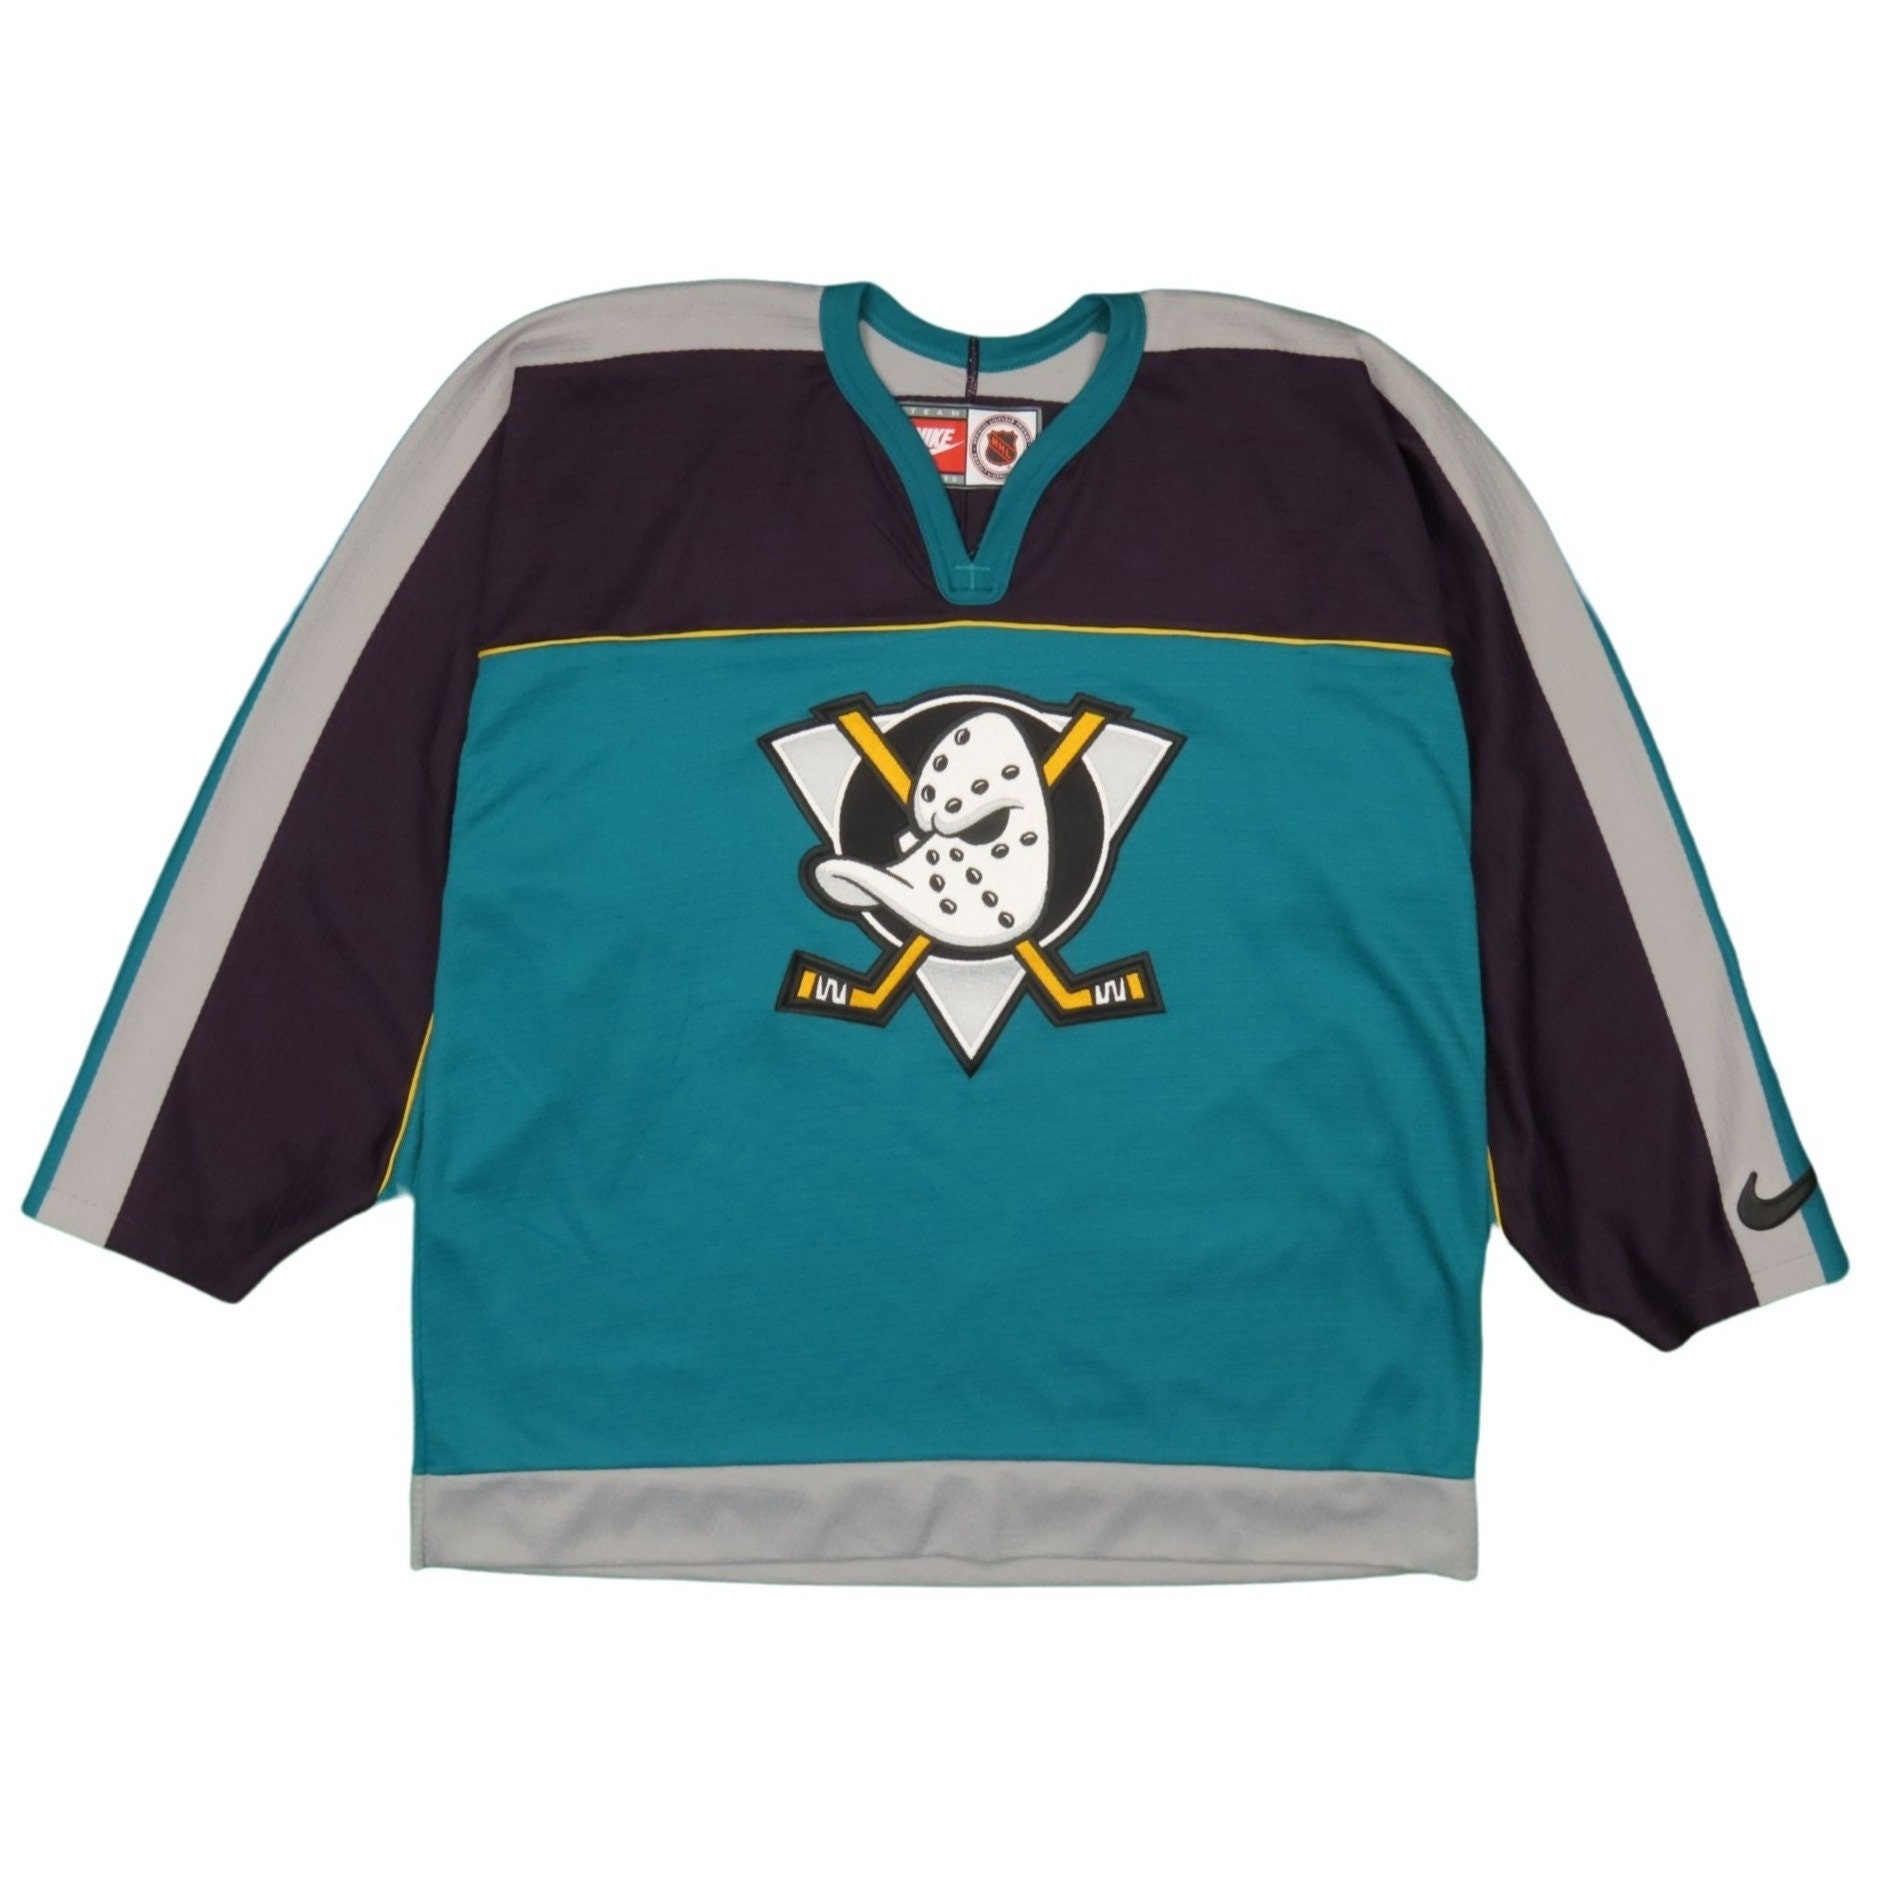 Deadstock Mighty Ducks Hockey Jersey T-shirt Nwt As-is